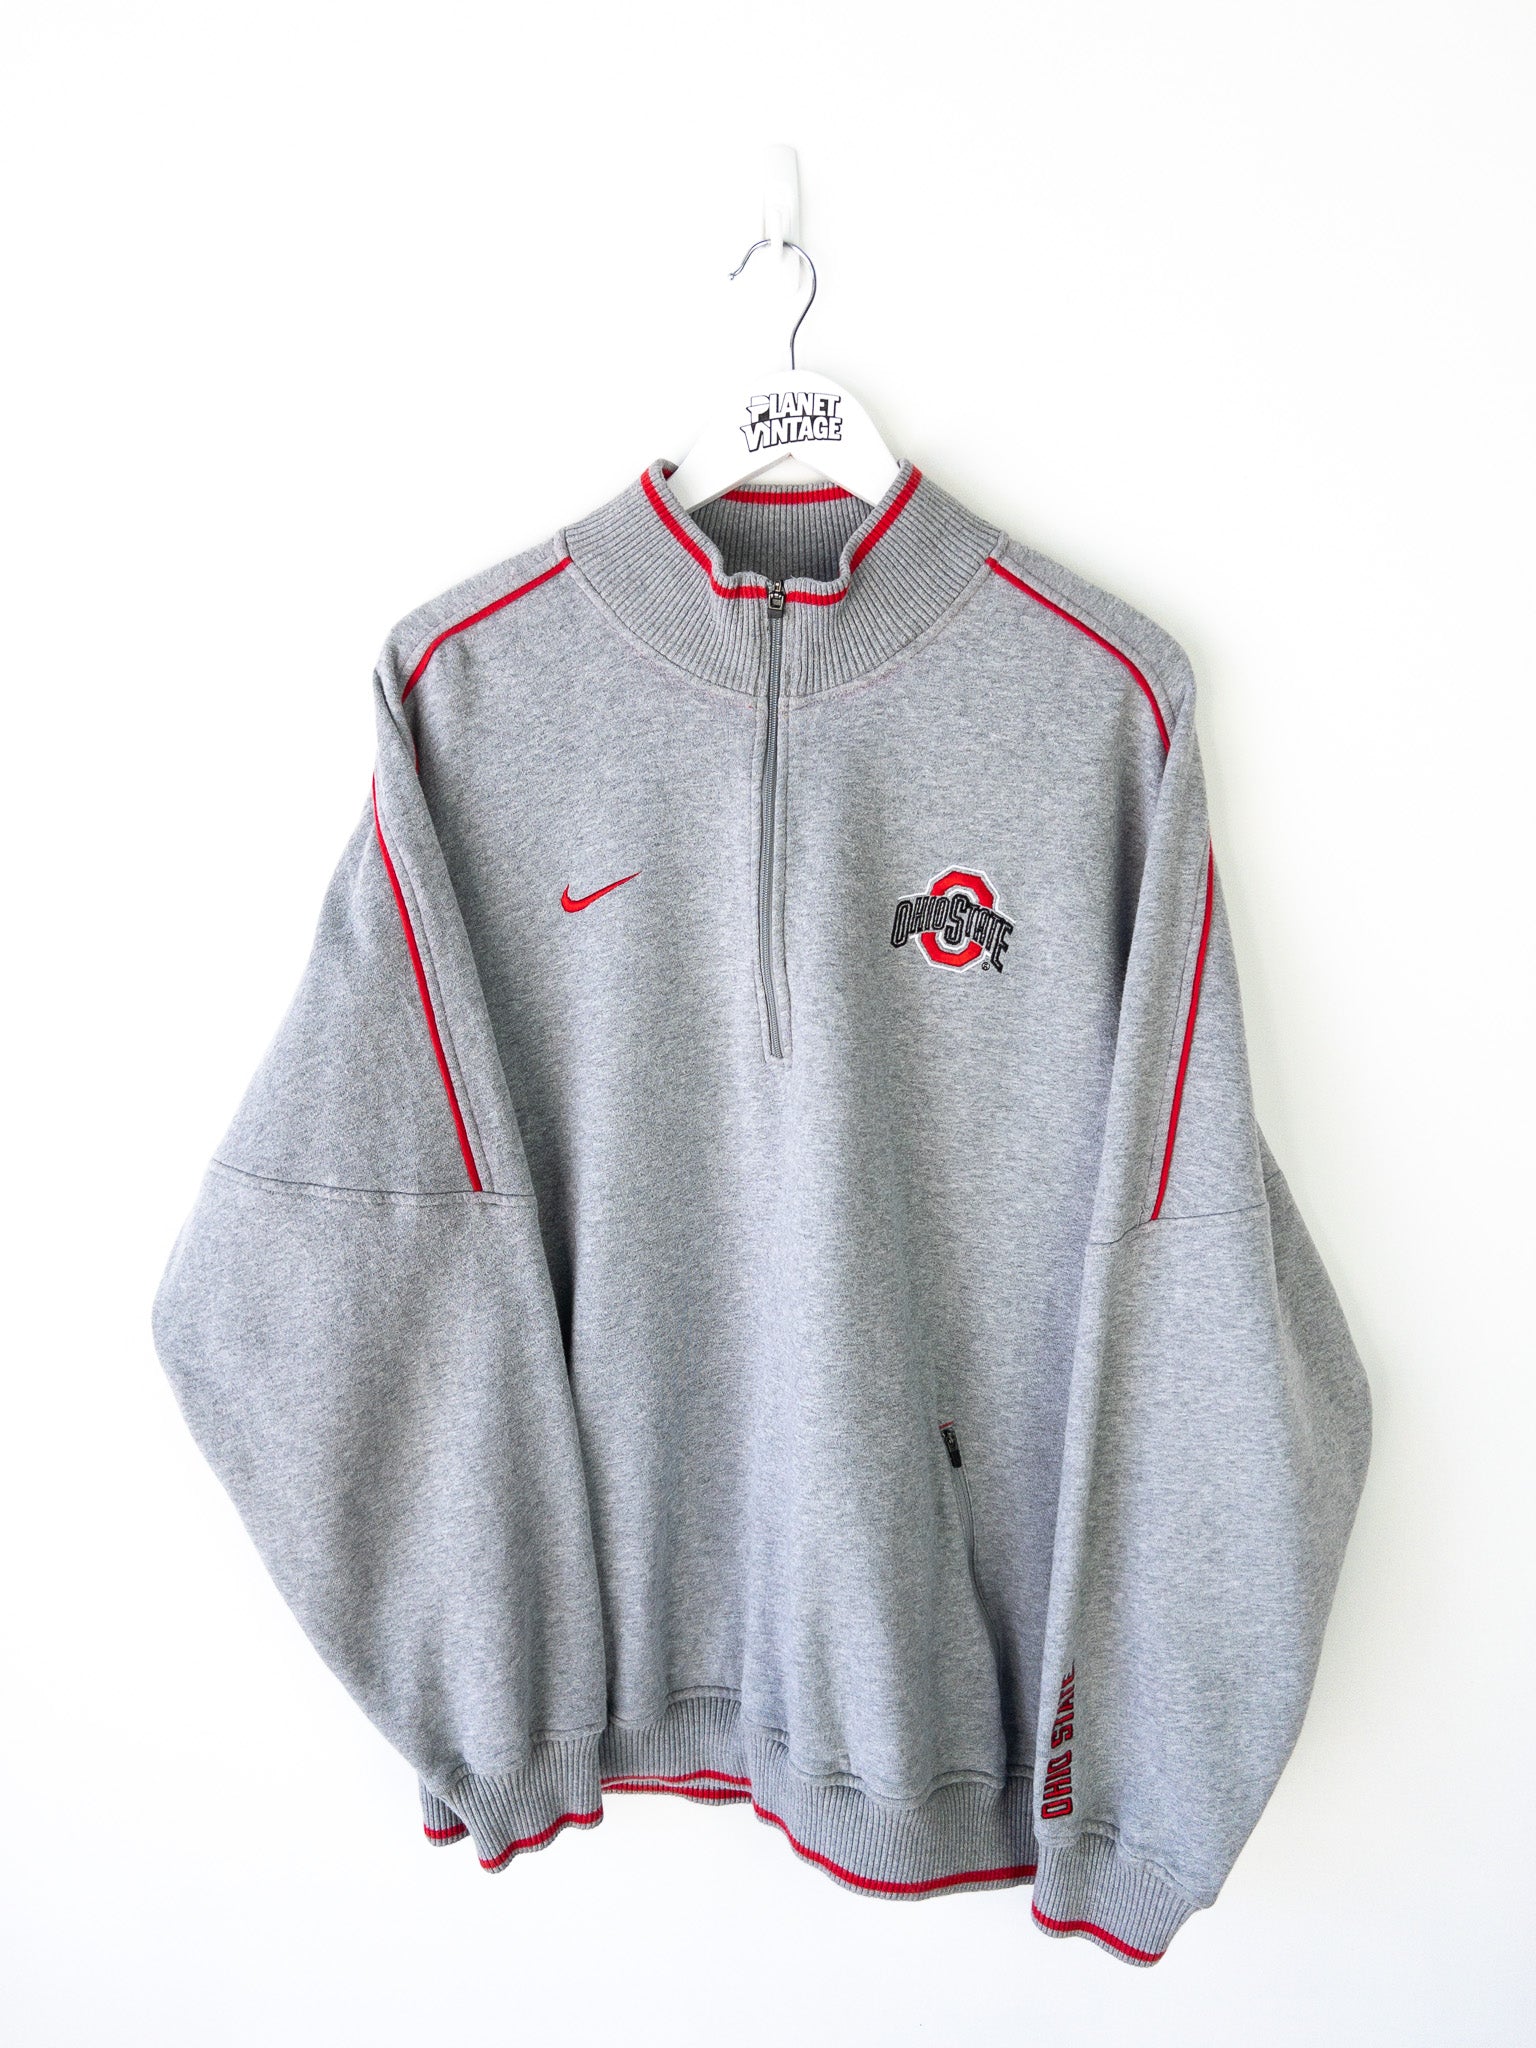 Vintage Ohio State Nike Quarter Zip Sweatshirt (XL)